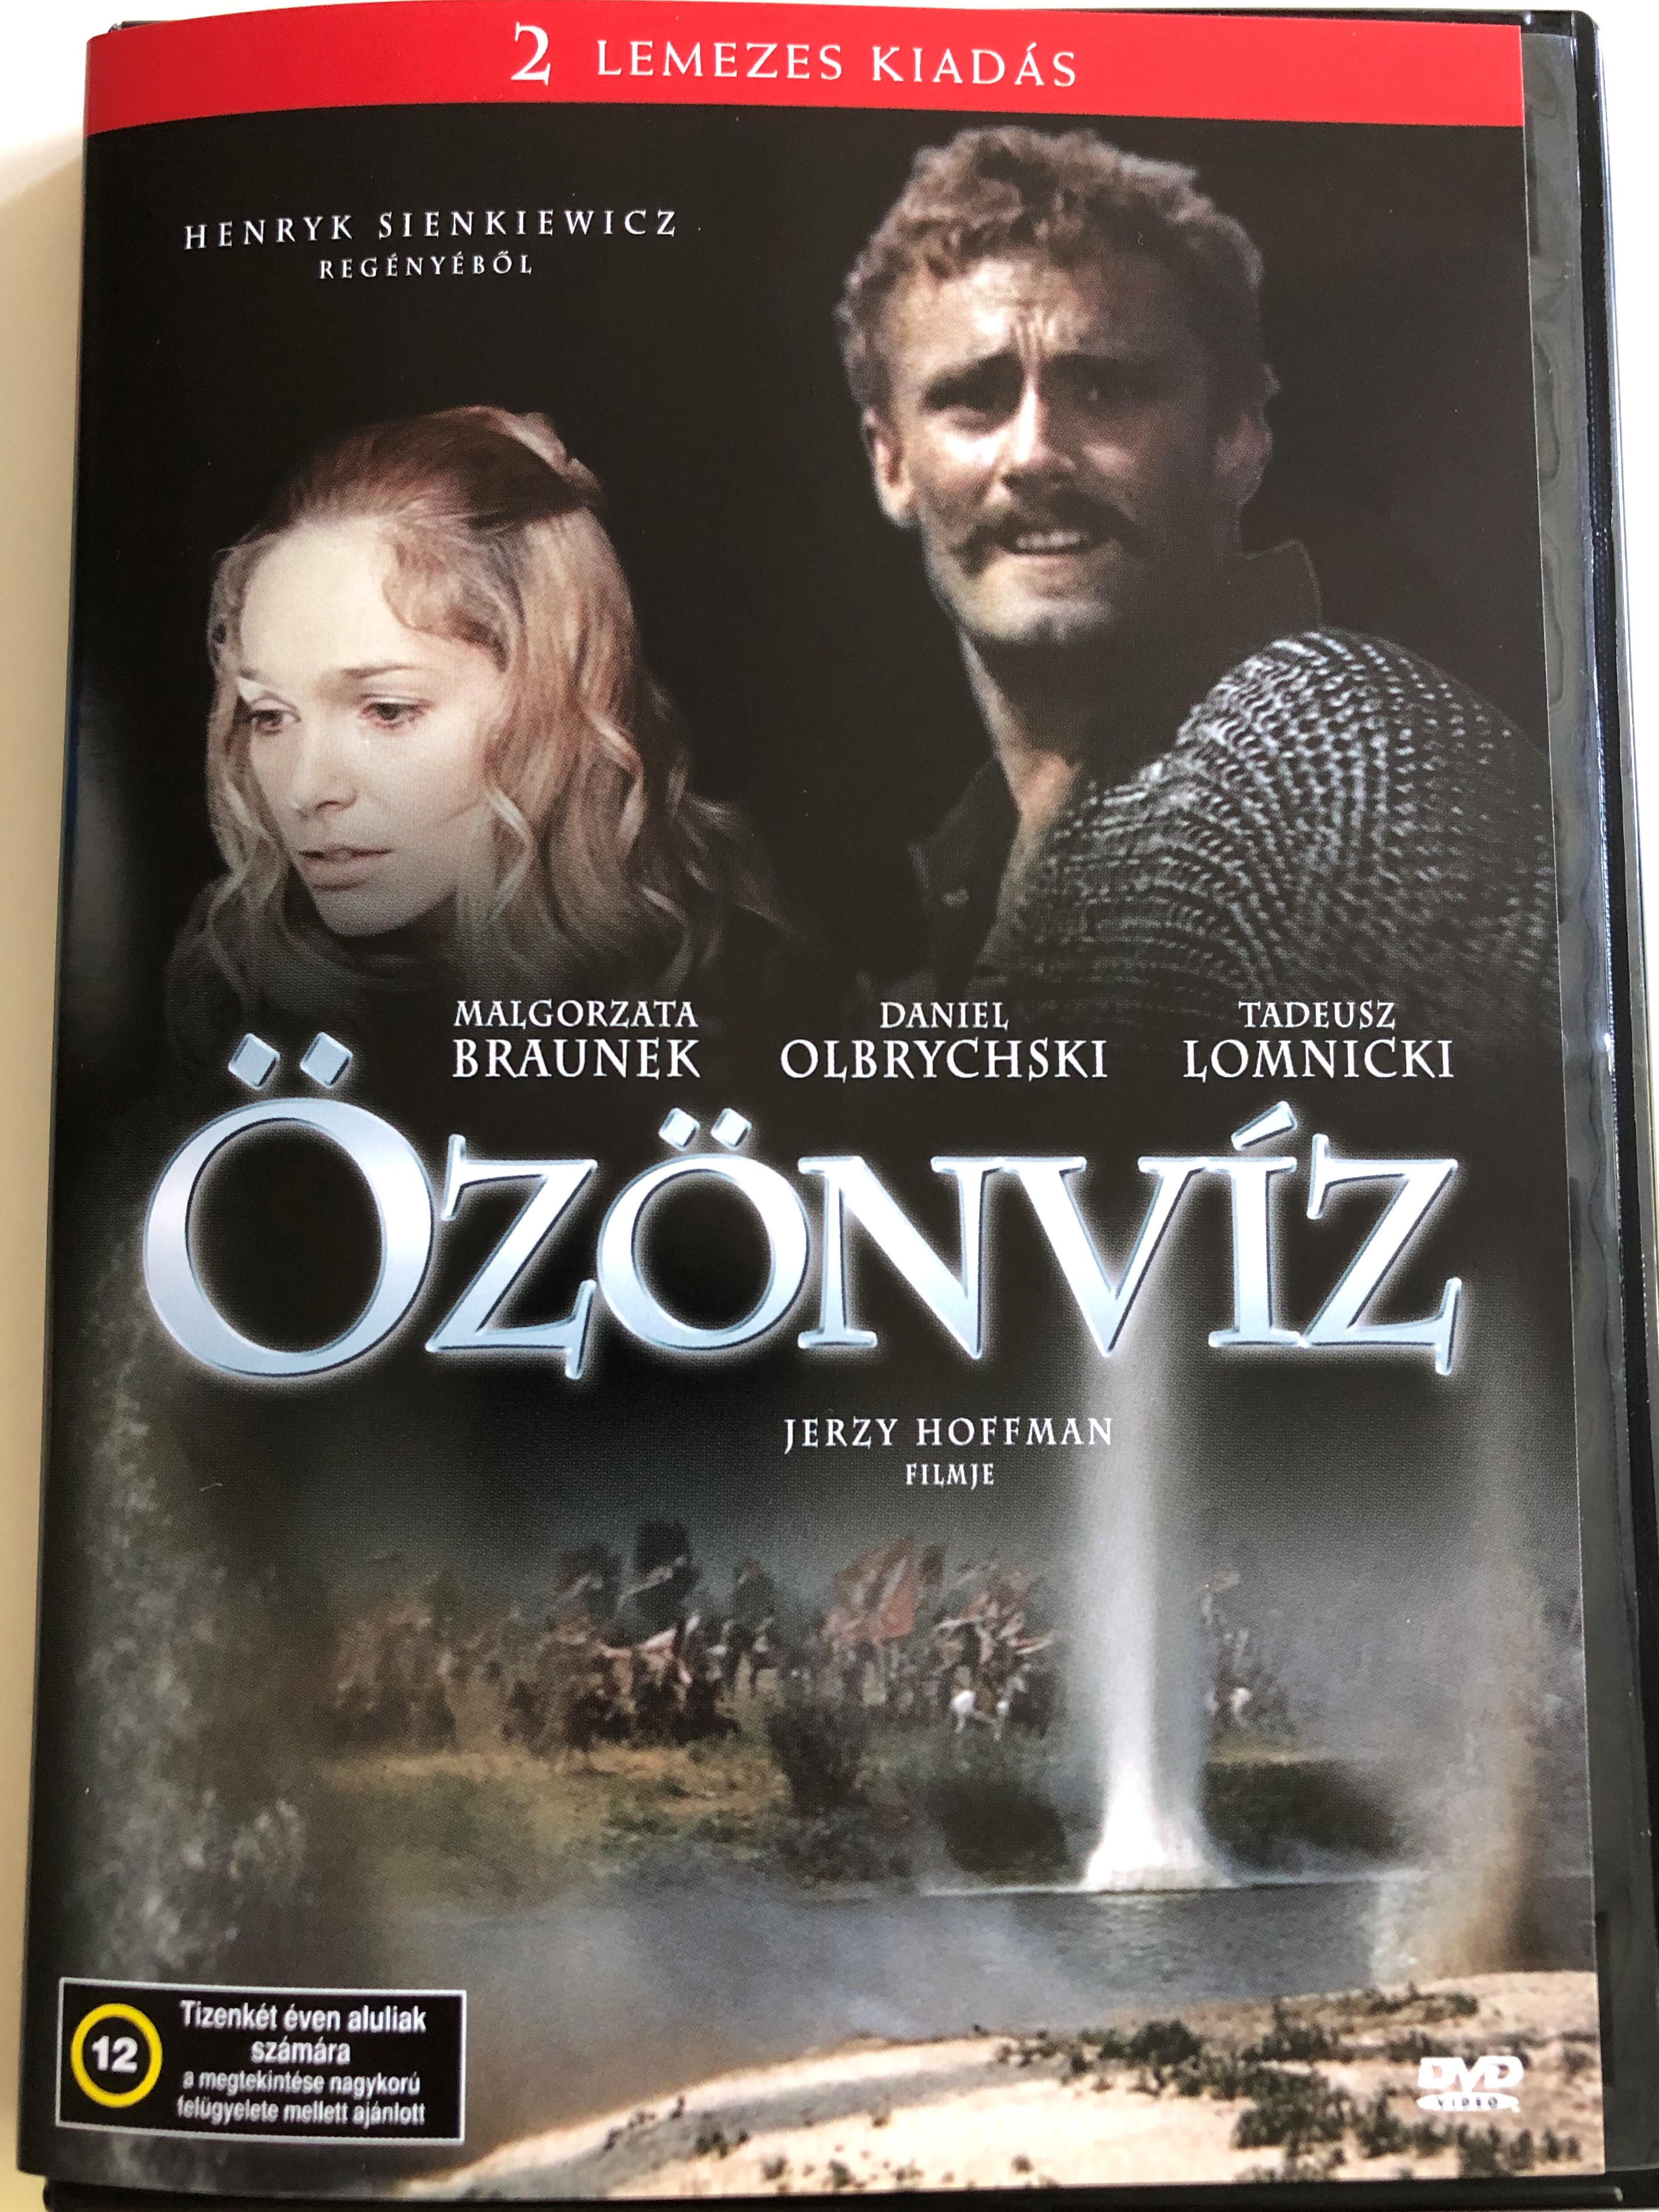 -potop-dvd-1974-z-nv-z-the-deluge-directed-by-jerzy-hoffman-starring.-daniel-olbrychski-malgorzata-braunek-tadeusz-lomnicki-1-.jpg